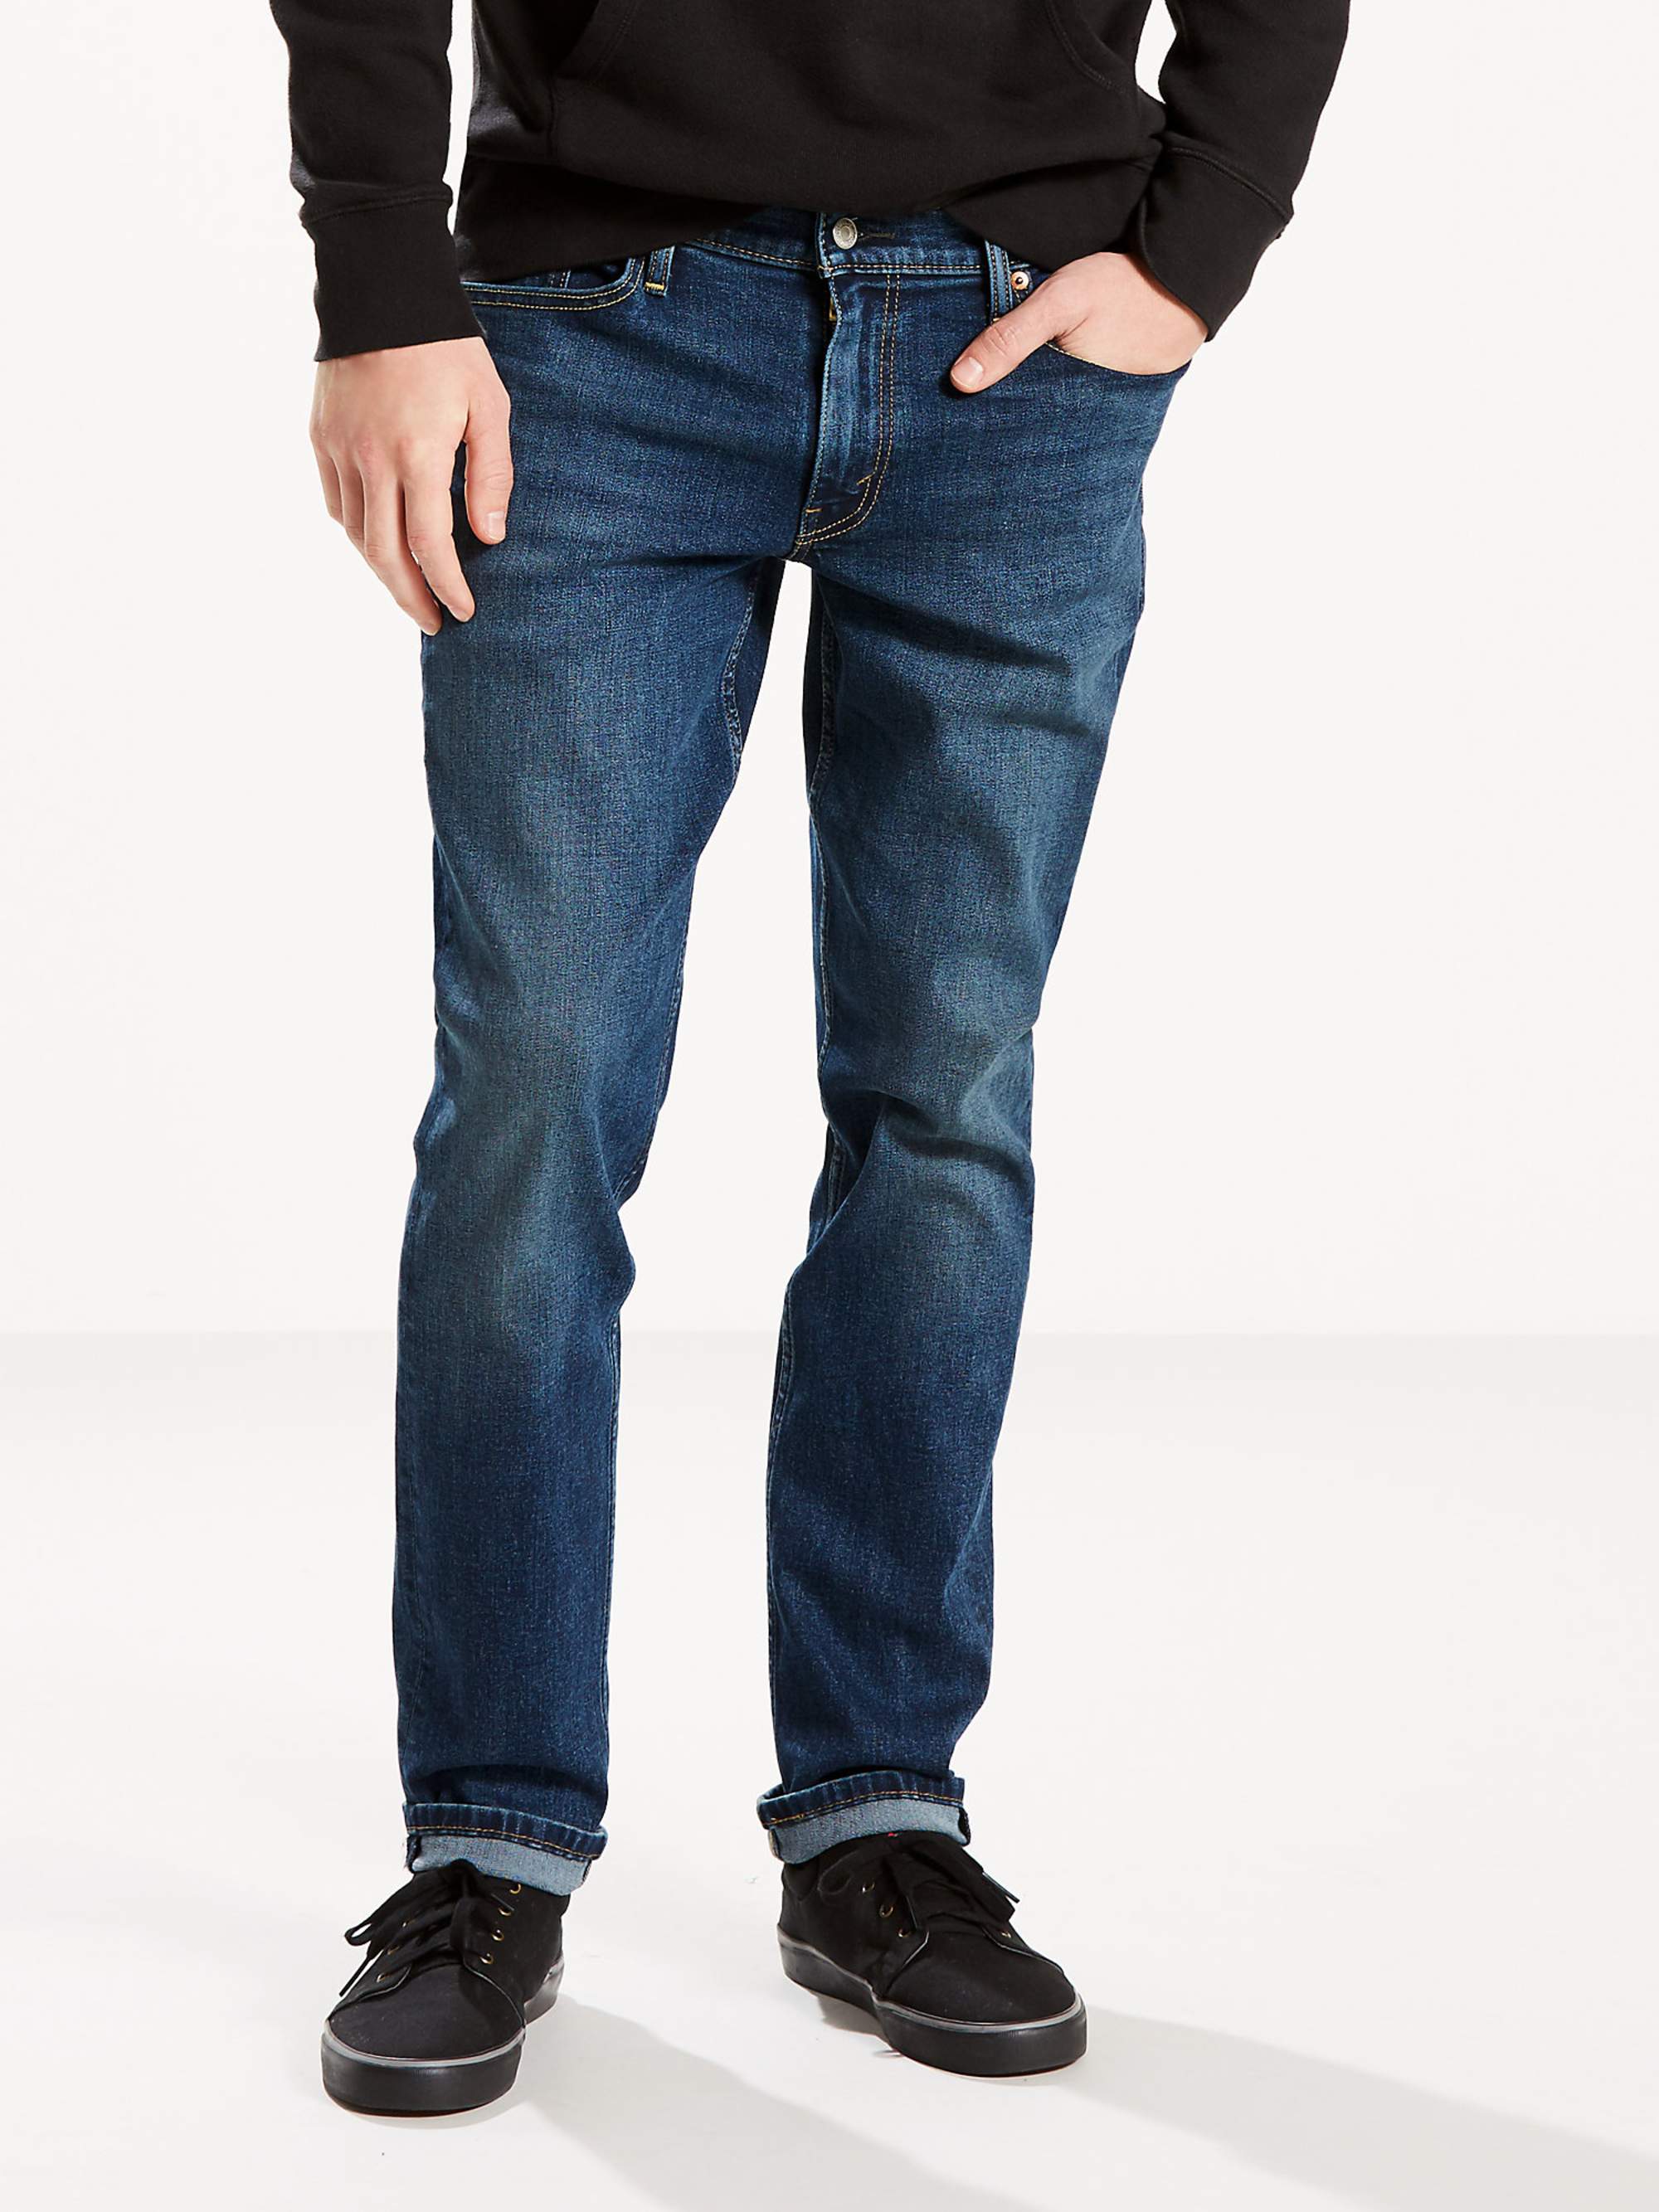 Levi's Men's 511 Slim Fit Jeans - image 1 of 9